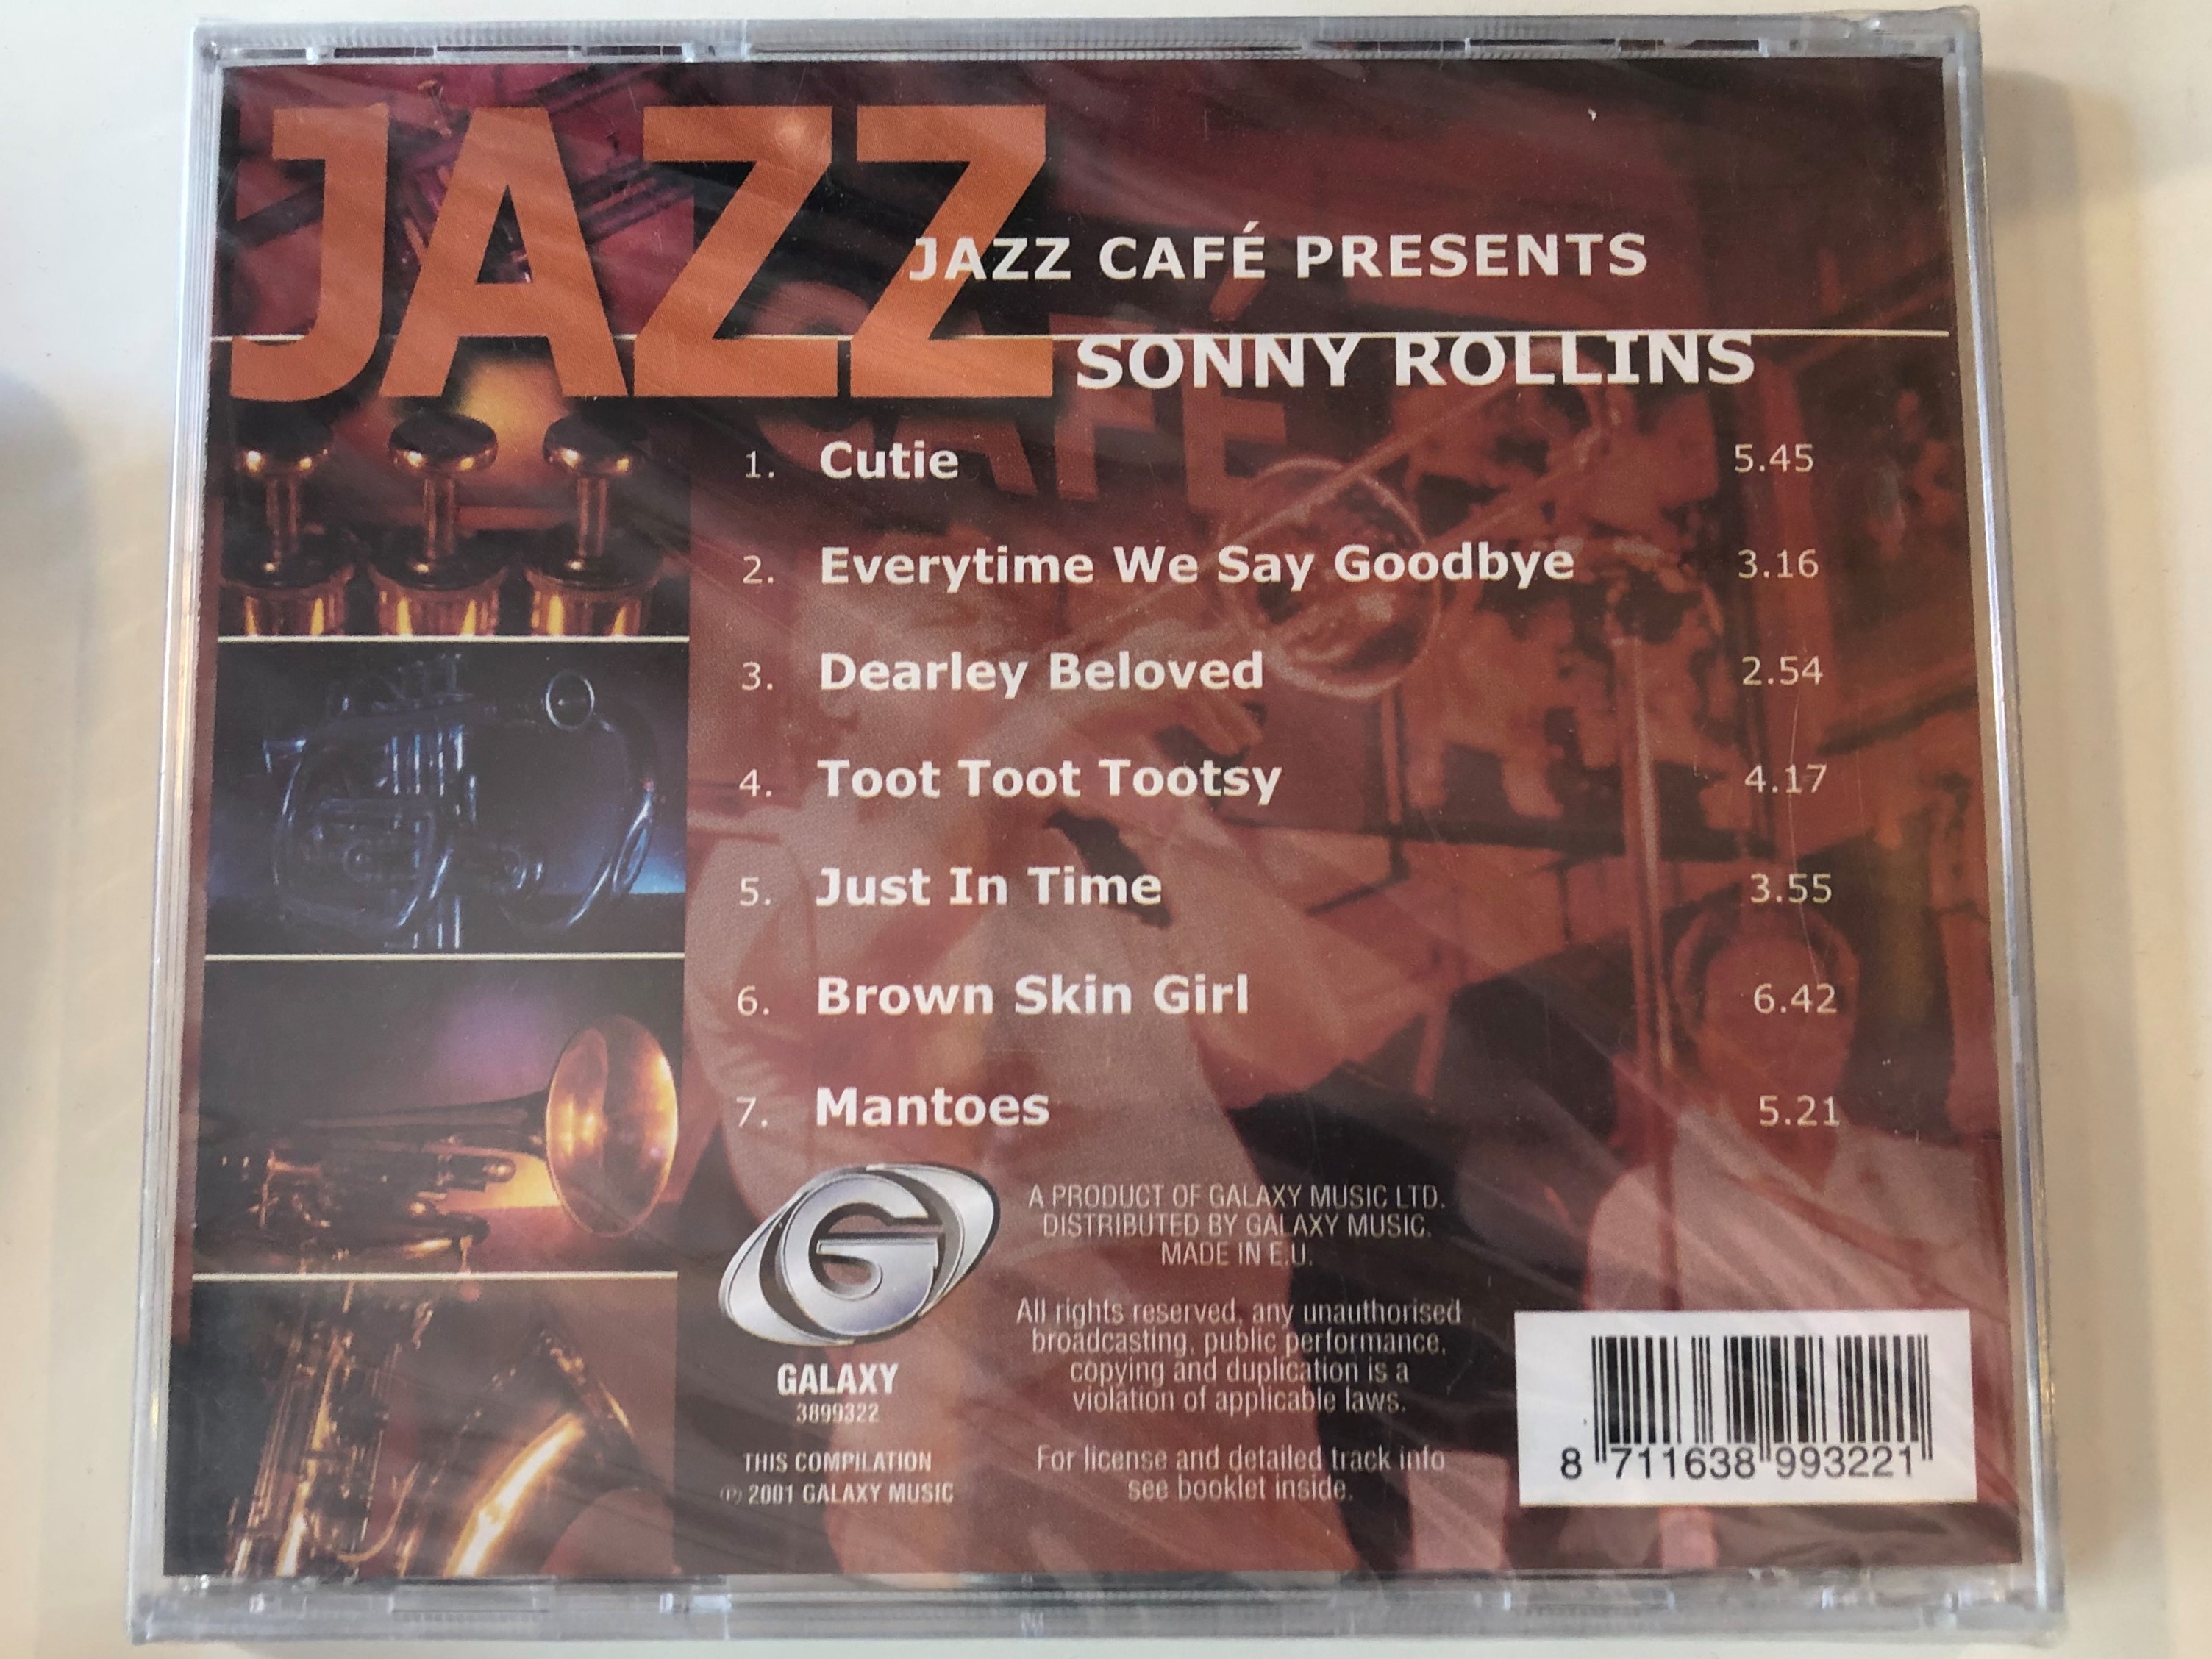 jazz-caf-presents-sonny-rollins-gateway-records-audio-cd-2001-3899322-2-.jpg